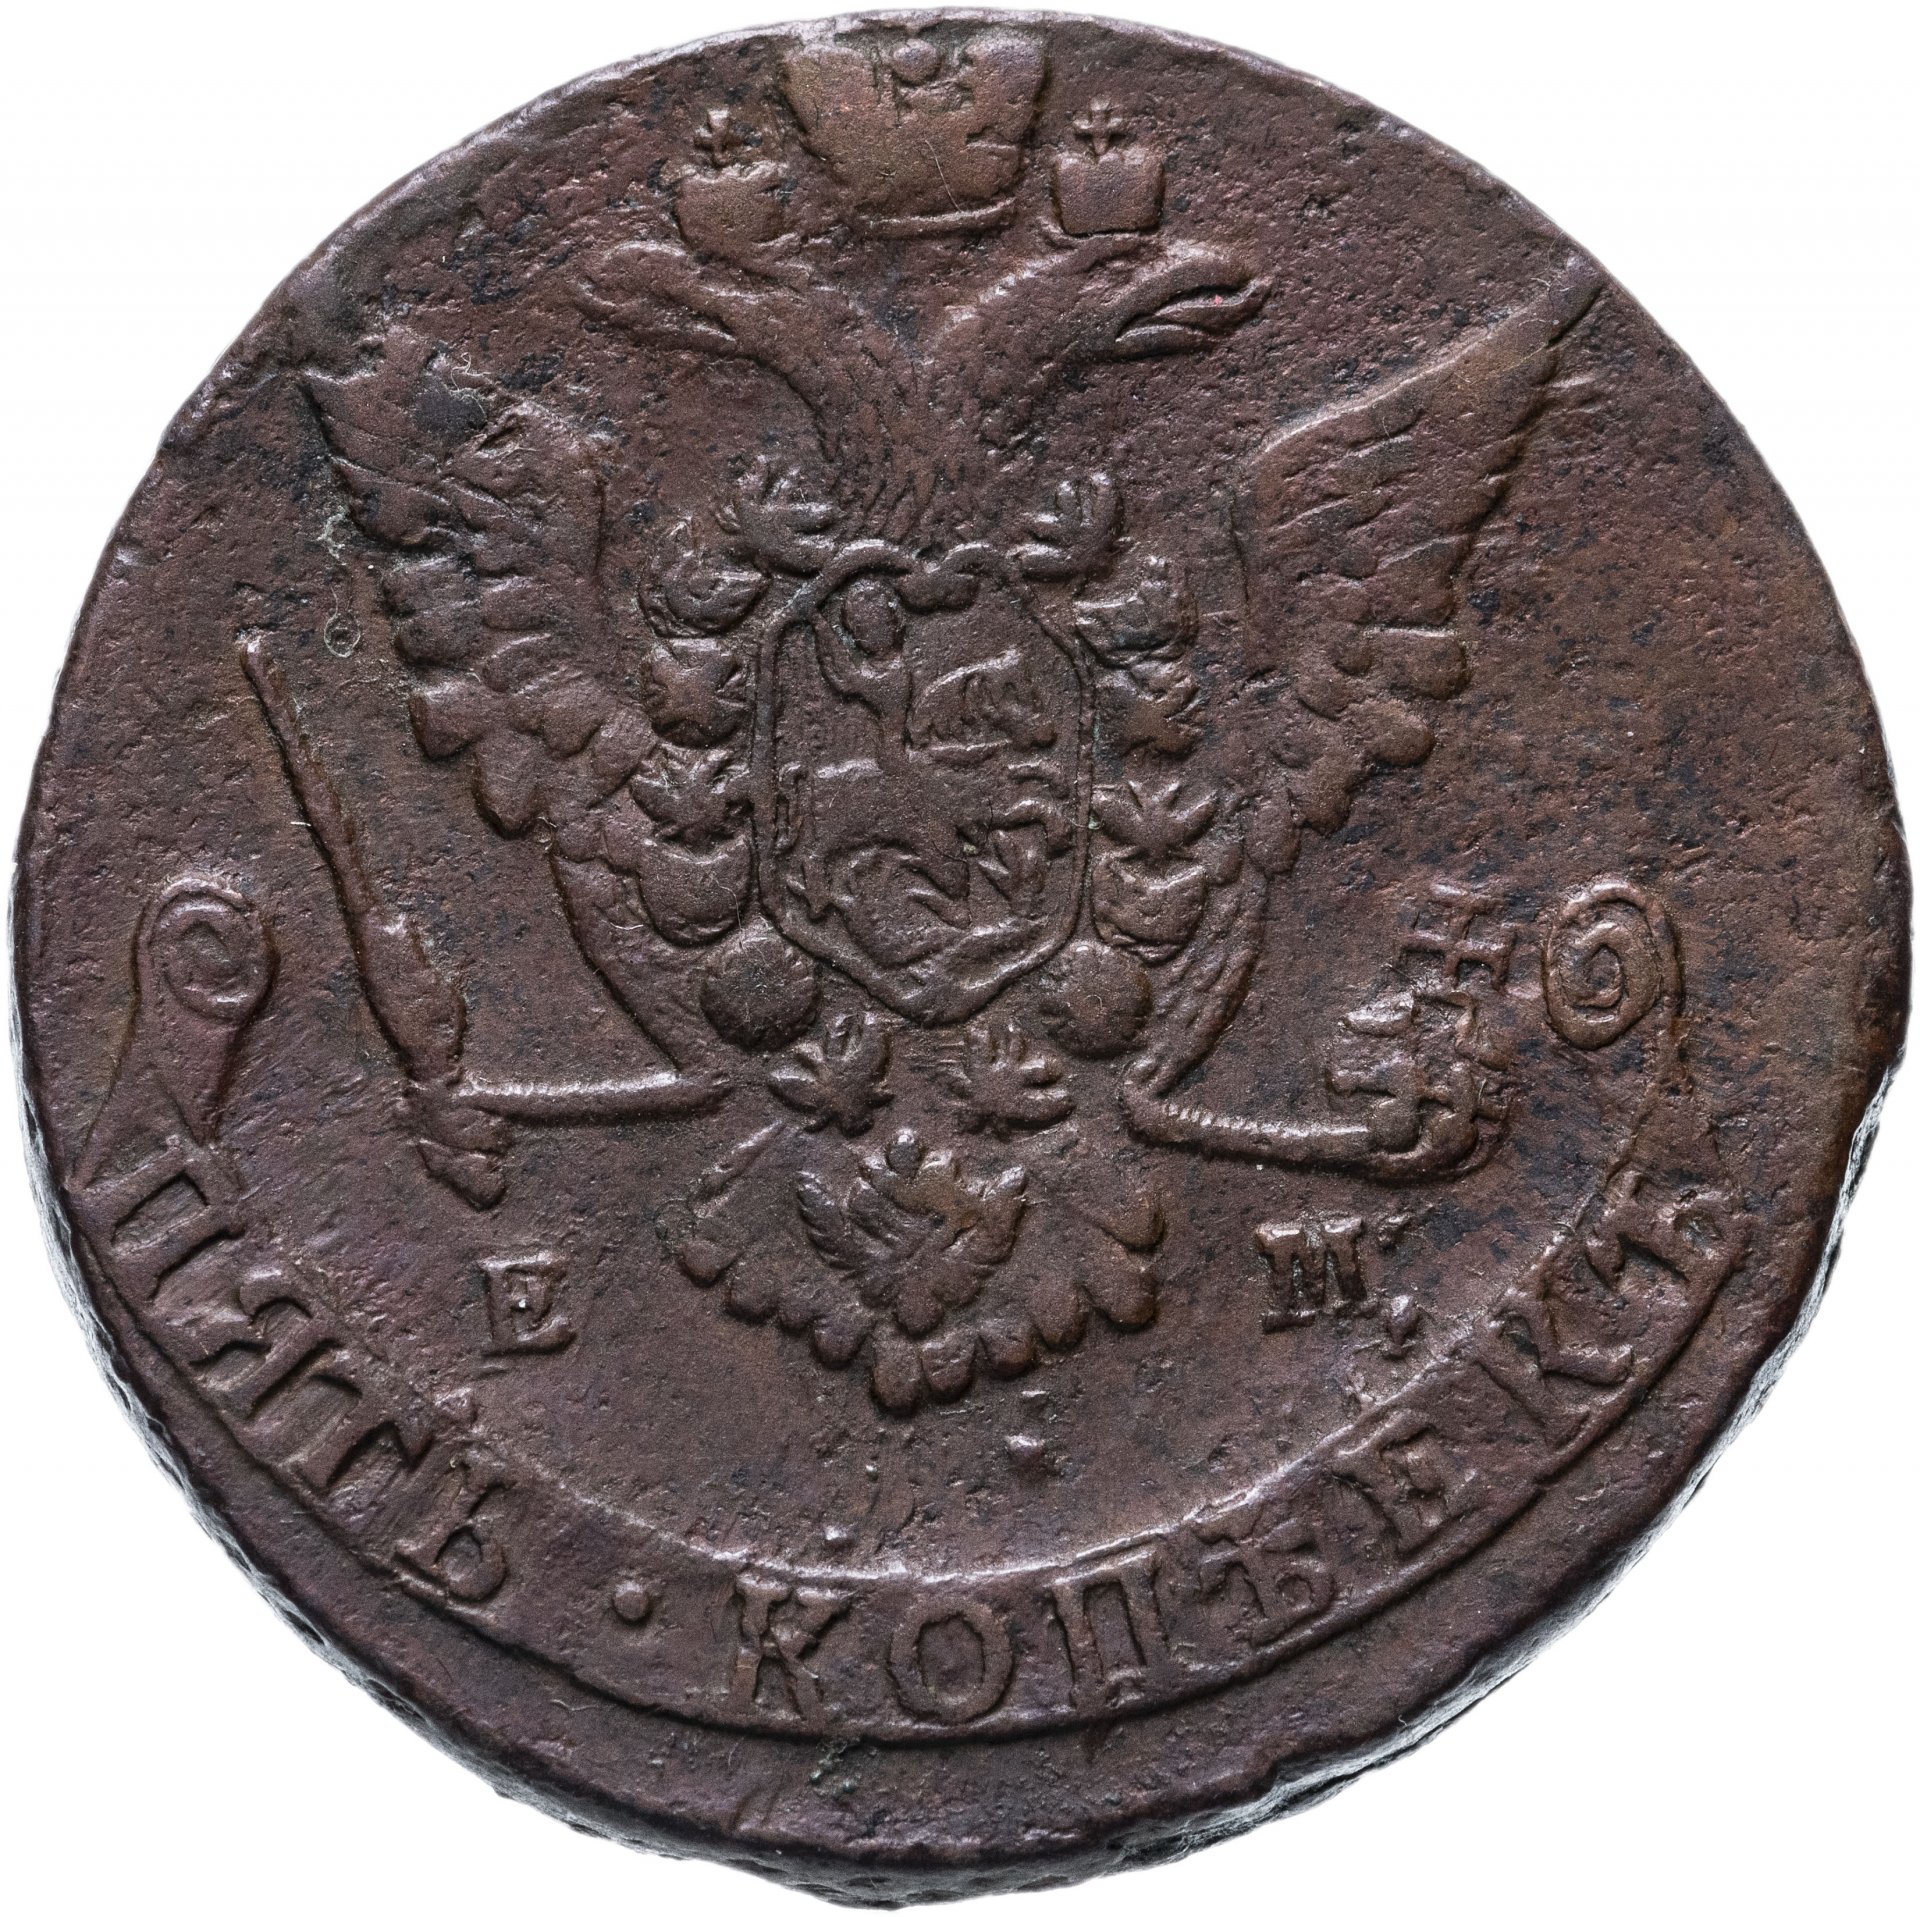 Царский коп. Царская монета 2 копейки 1811. Старинные монеты царской 2 копейки. Царские 2 копейки ИД.